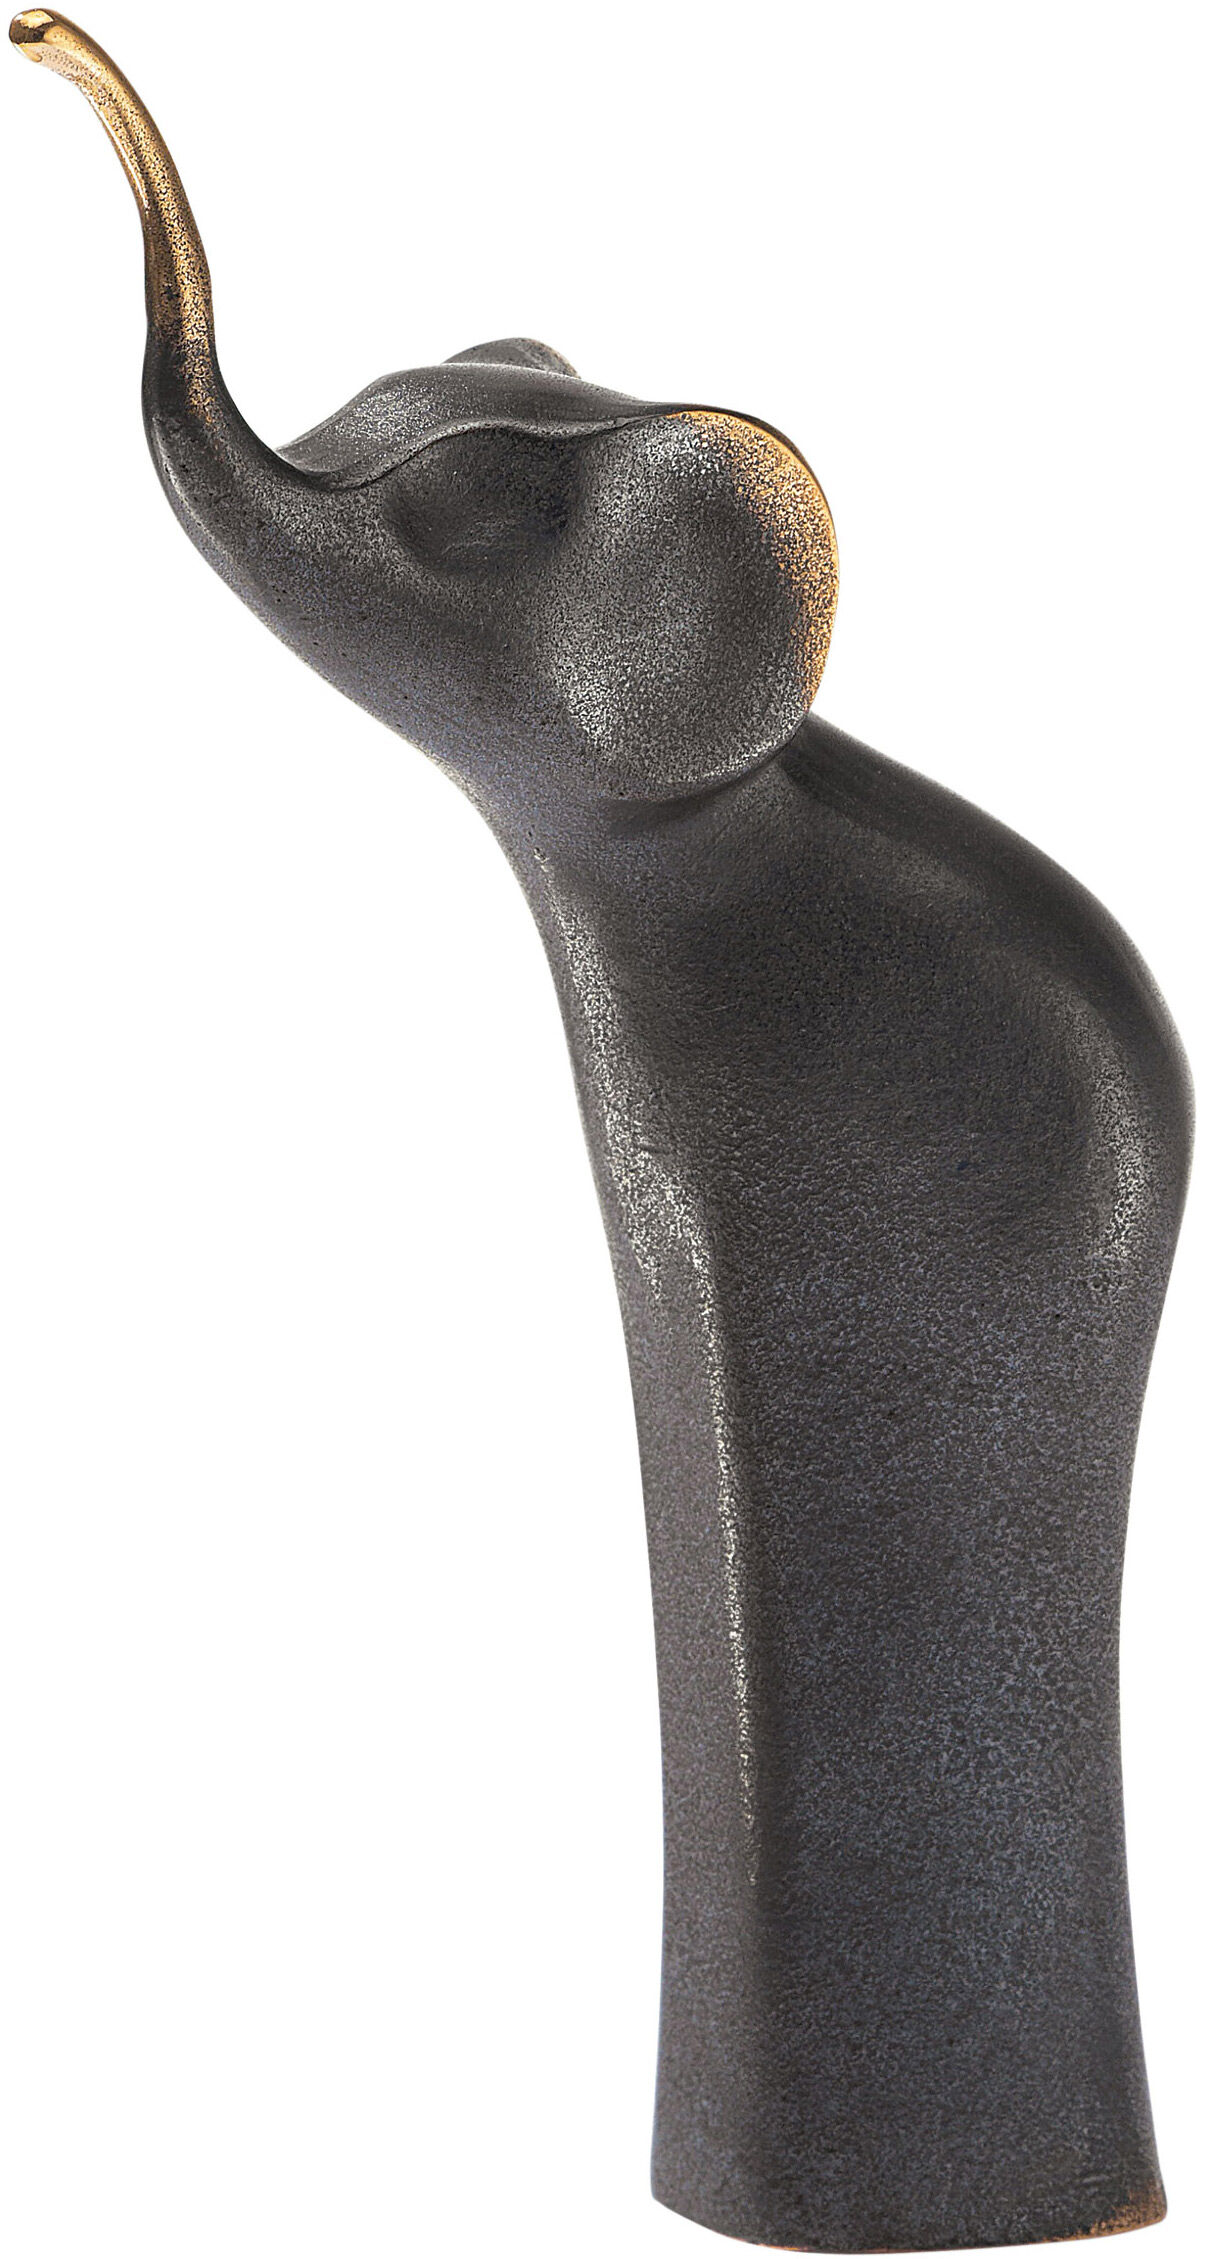 Animal sculpture "Elephant", bronze by Kerstin Stark